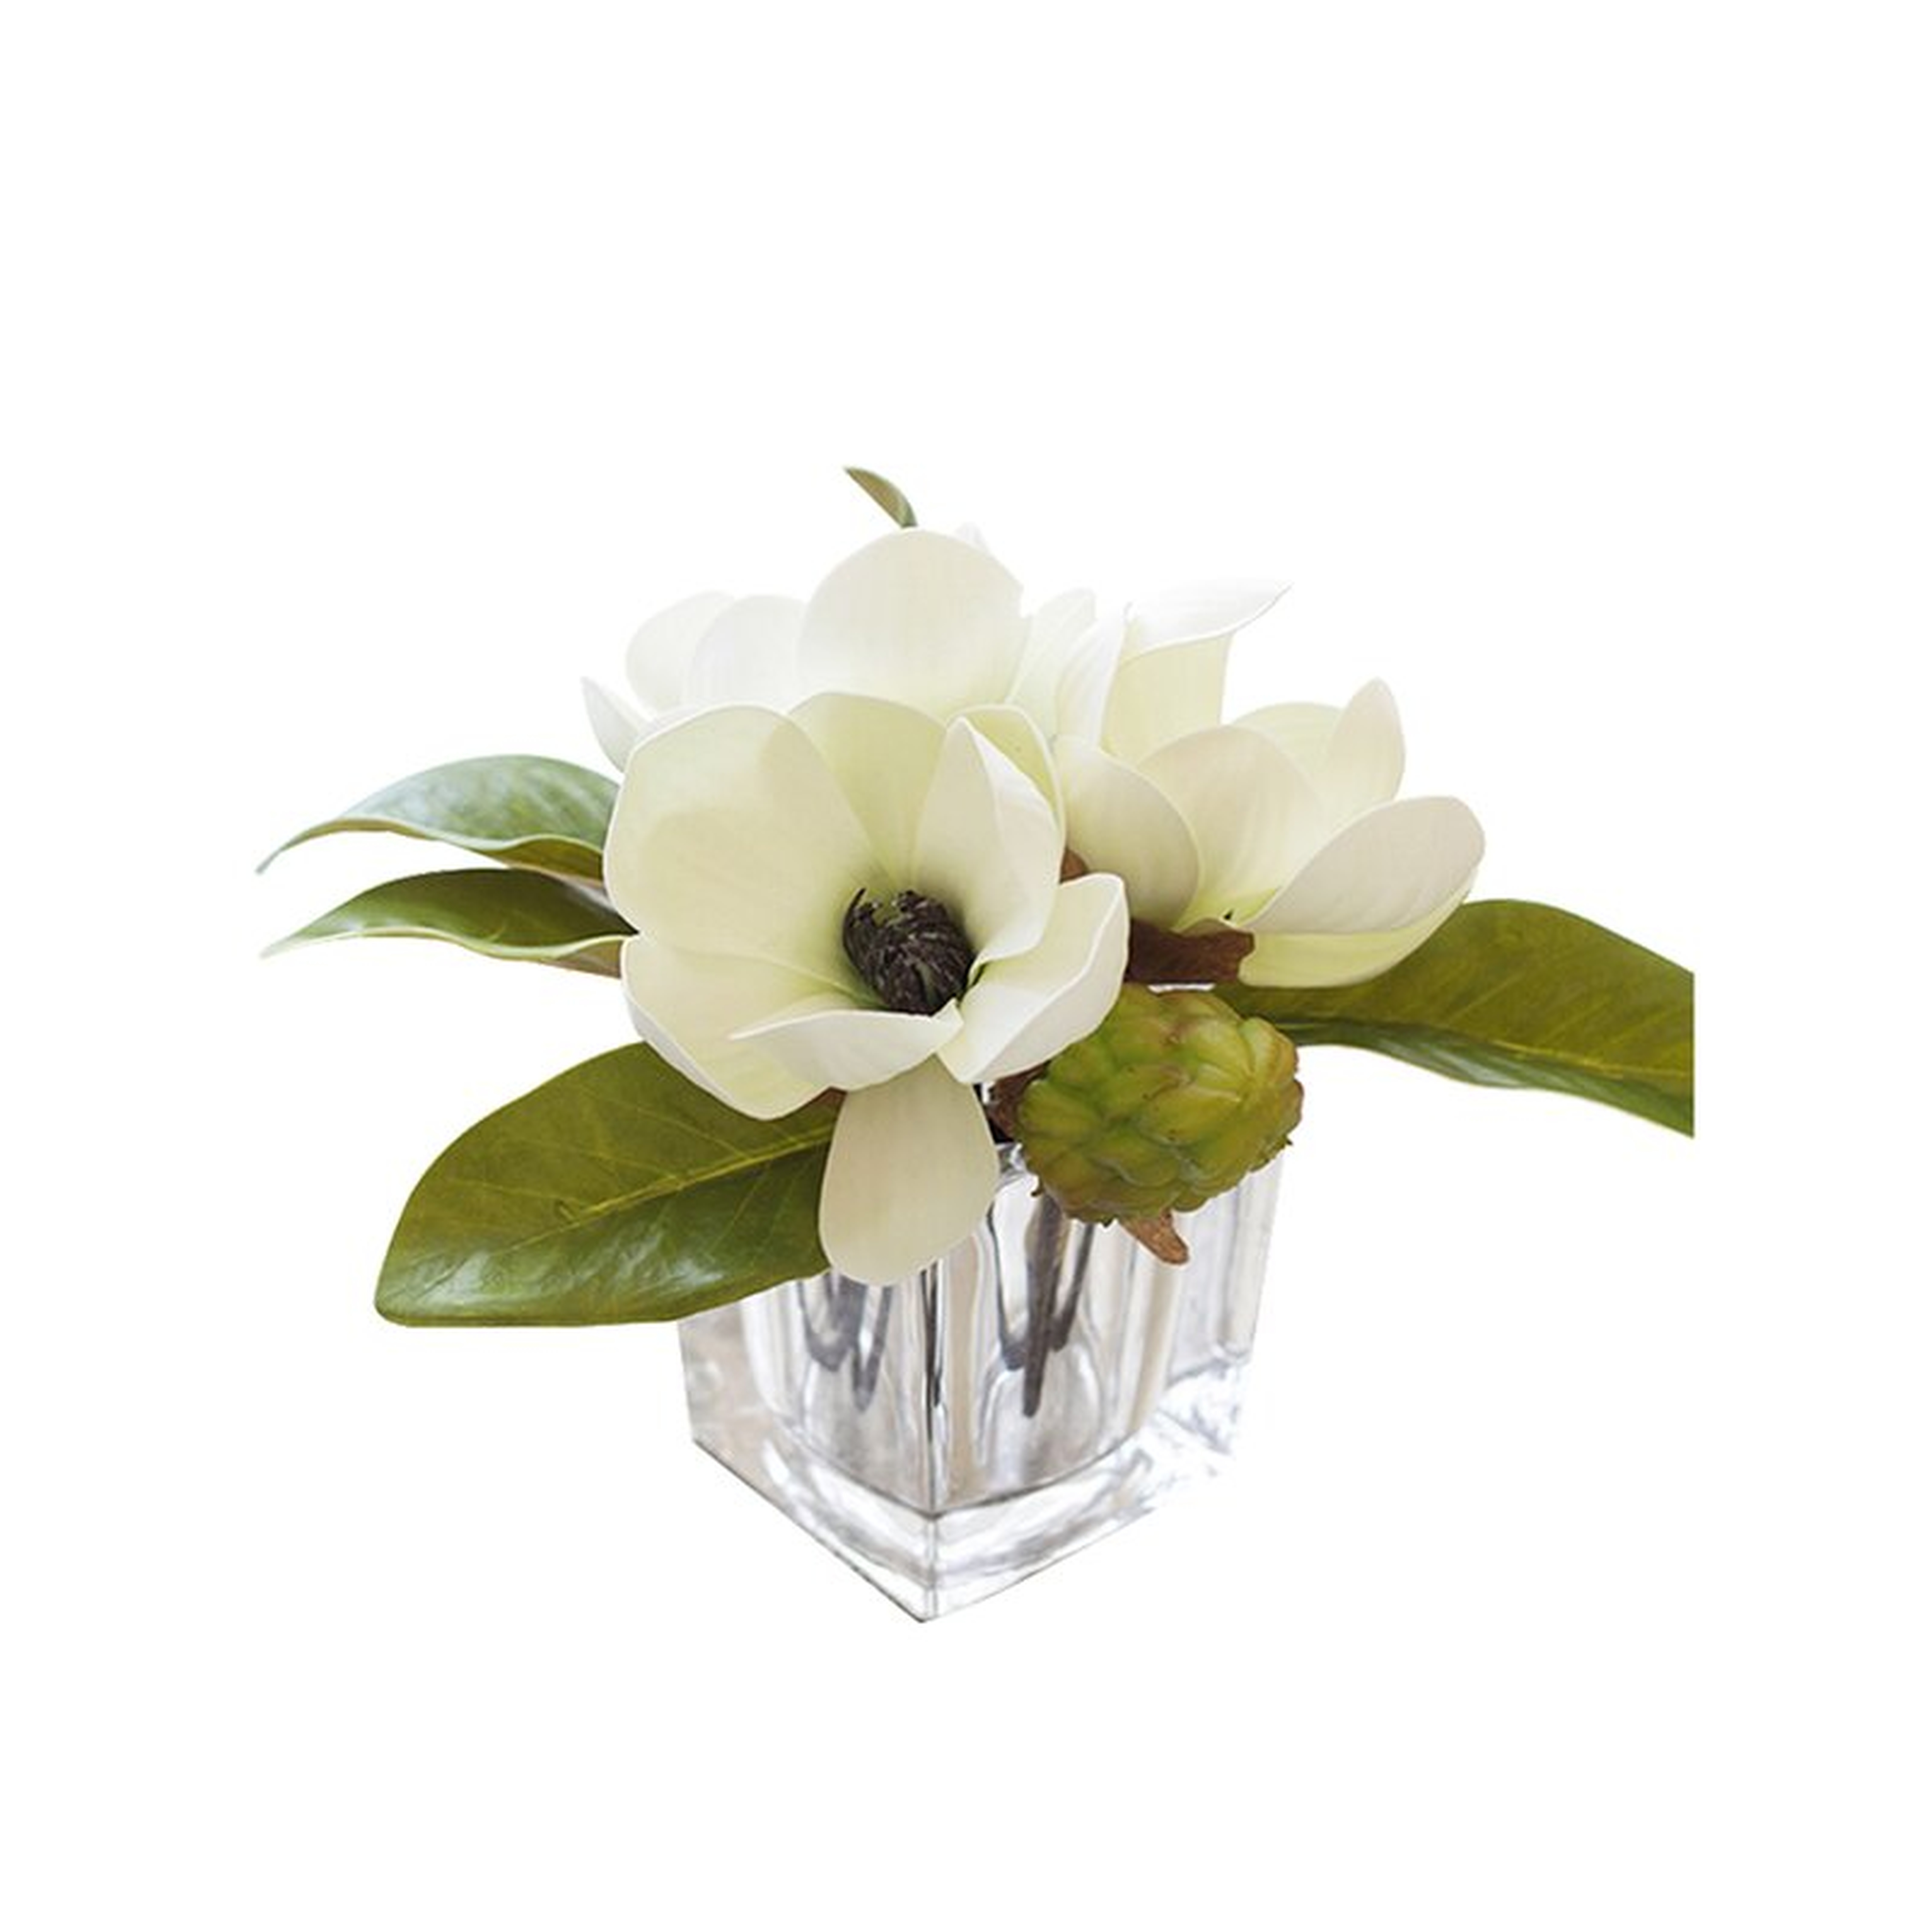 Silk Magnolia Floral Arrangement in Cube Glass Vase - Wayfair